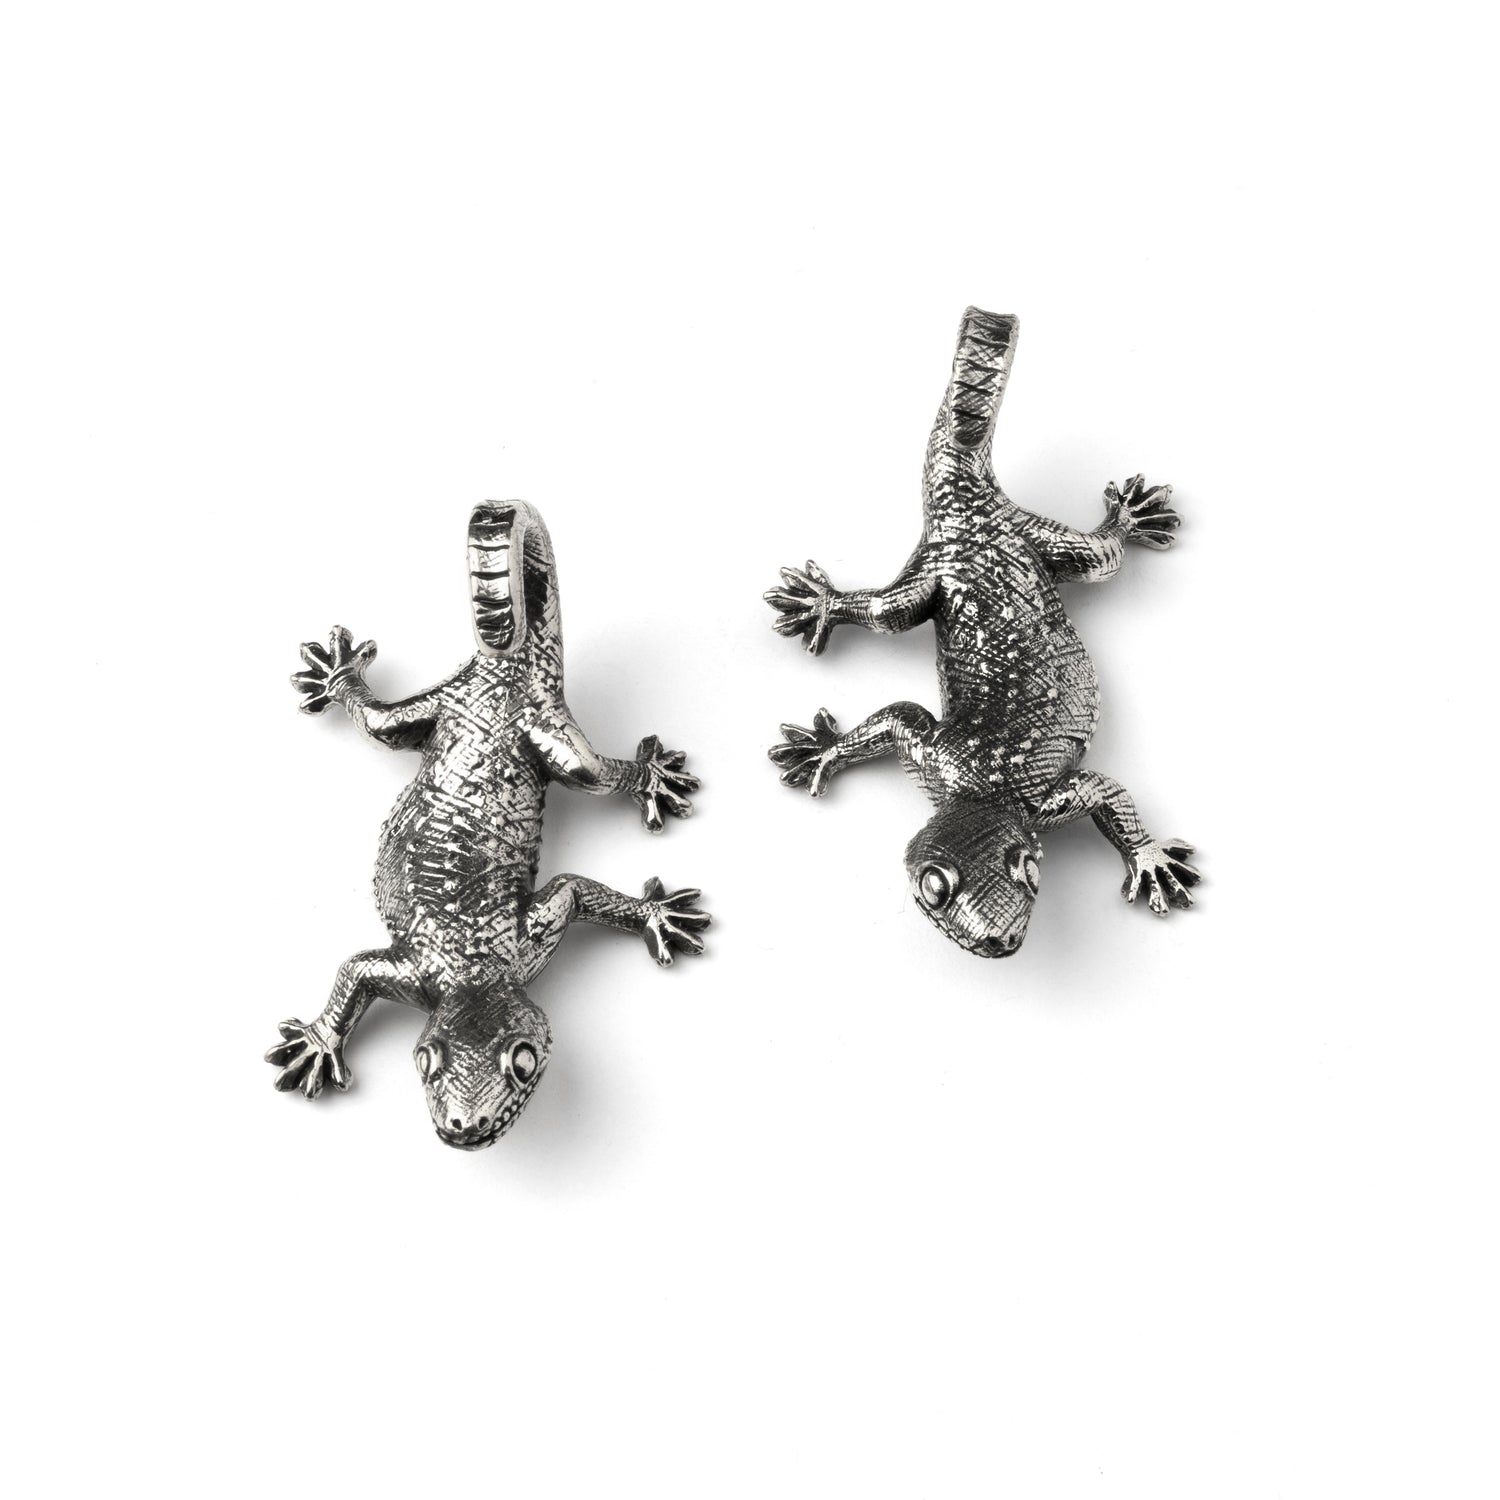 pair of silver brass lizard ear hangers frontal view